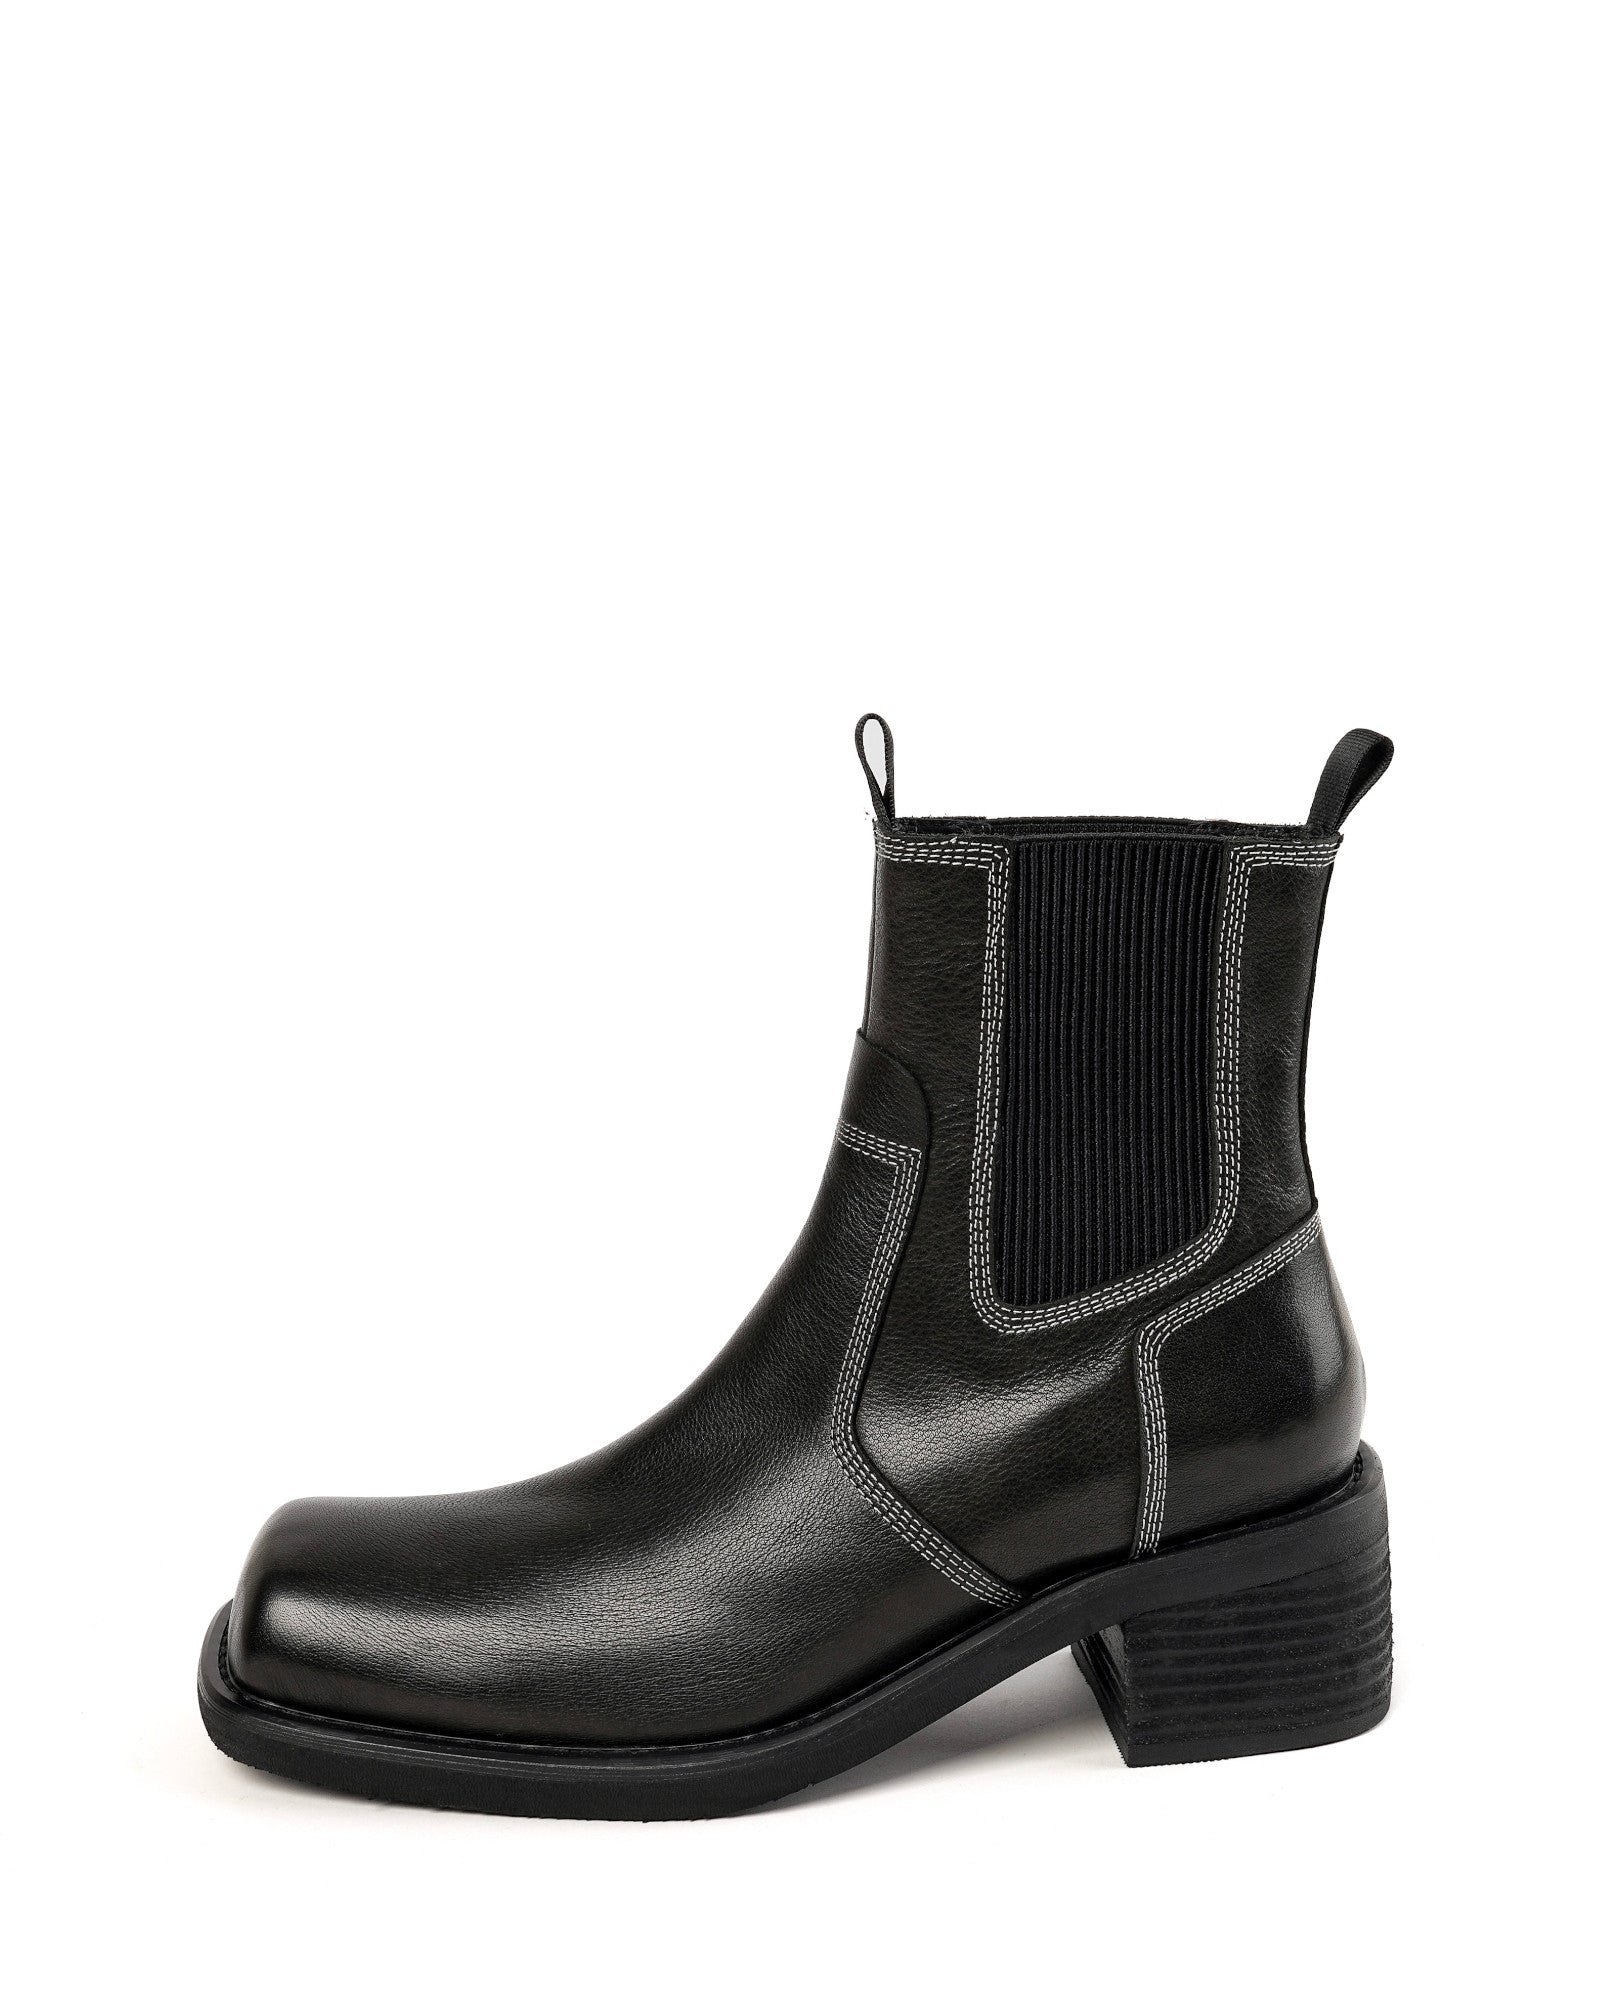 Bora-square-toe-black-leather-chelsea-boots-1